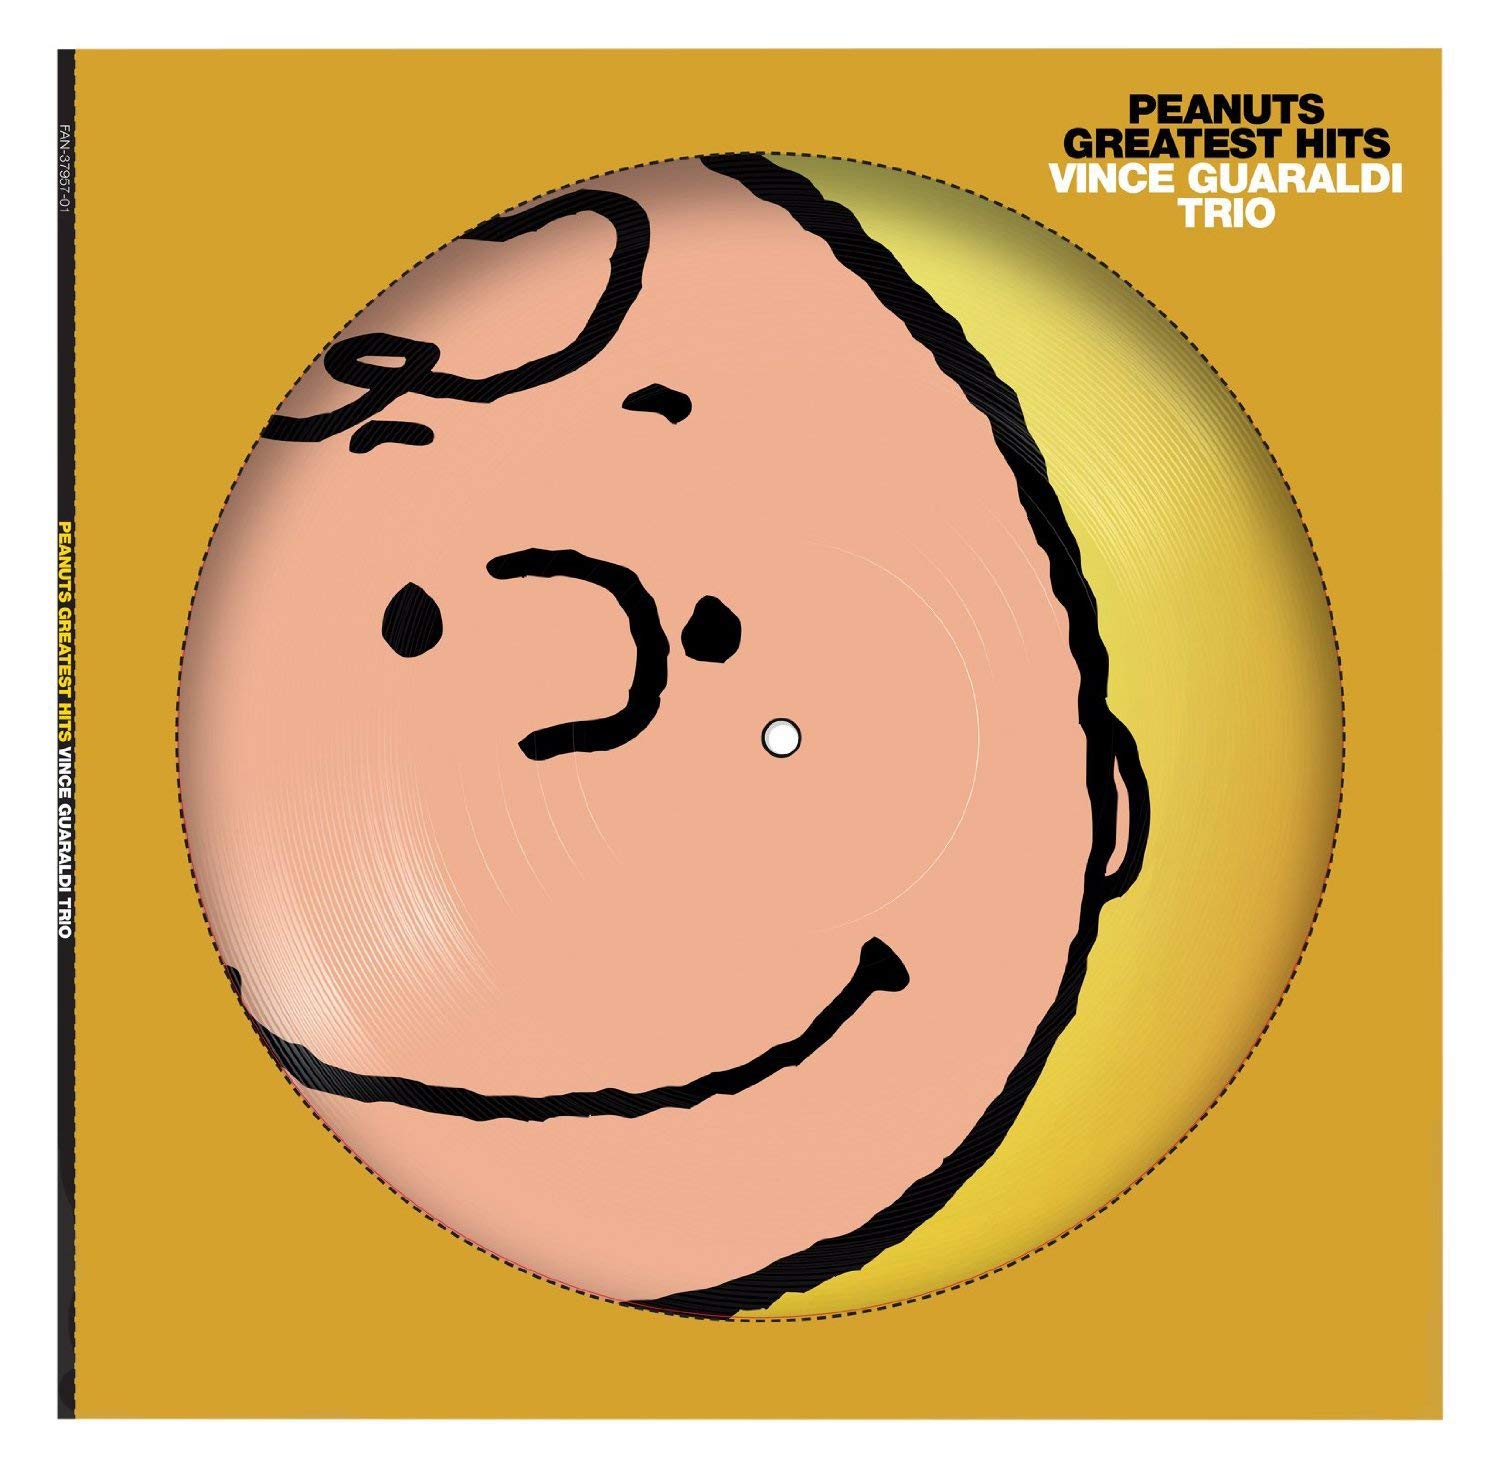 TV 애니메이션 '피너츠' 사운드트랙 베스트 - 빈스 과랄디 트리오 (Peanuts Greatest Hits - Vince Guaraldi Trio) [픽쳐 디스크 LP]